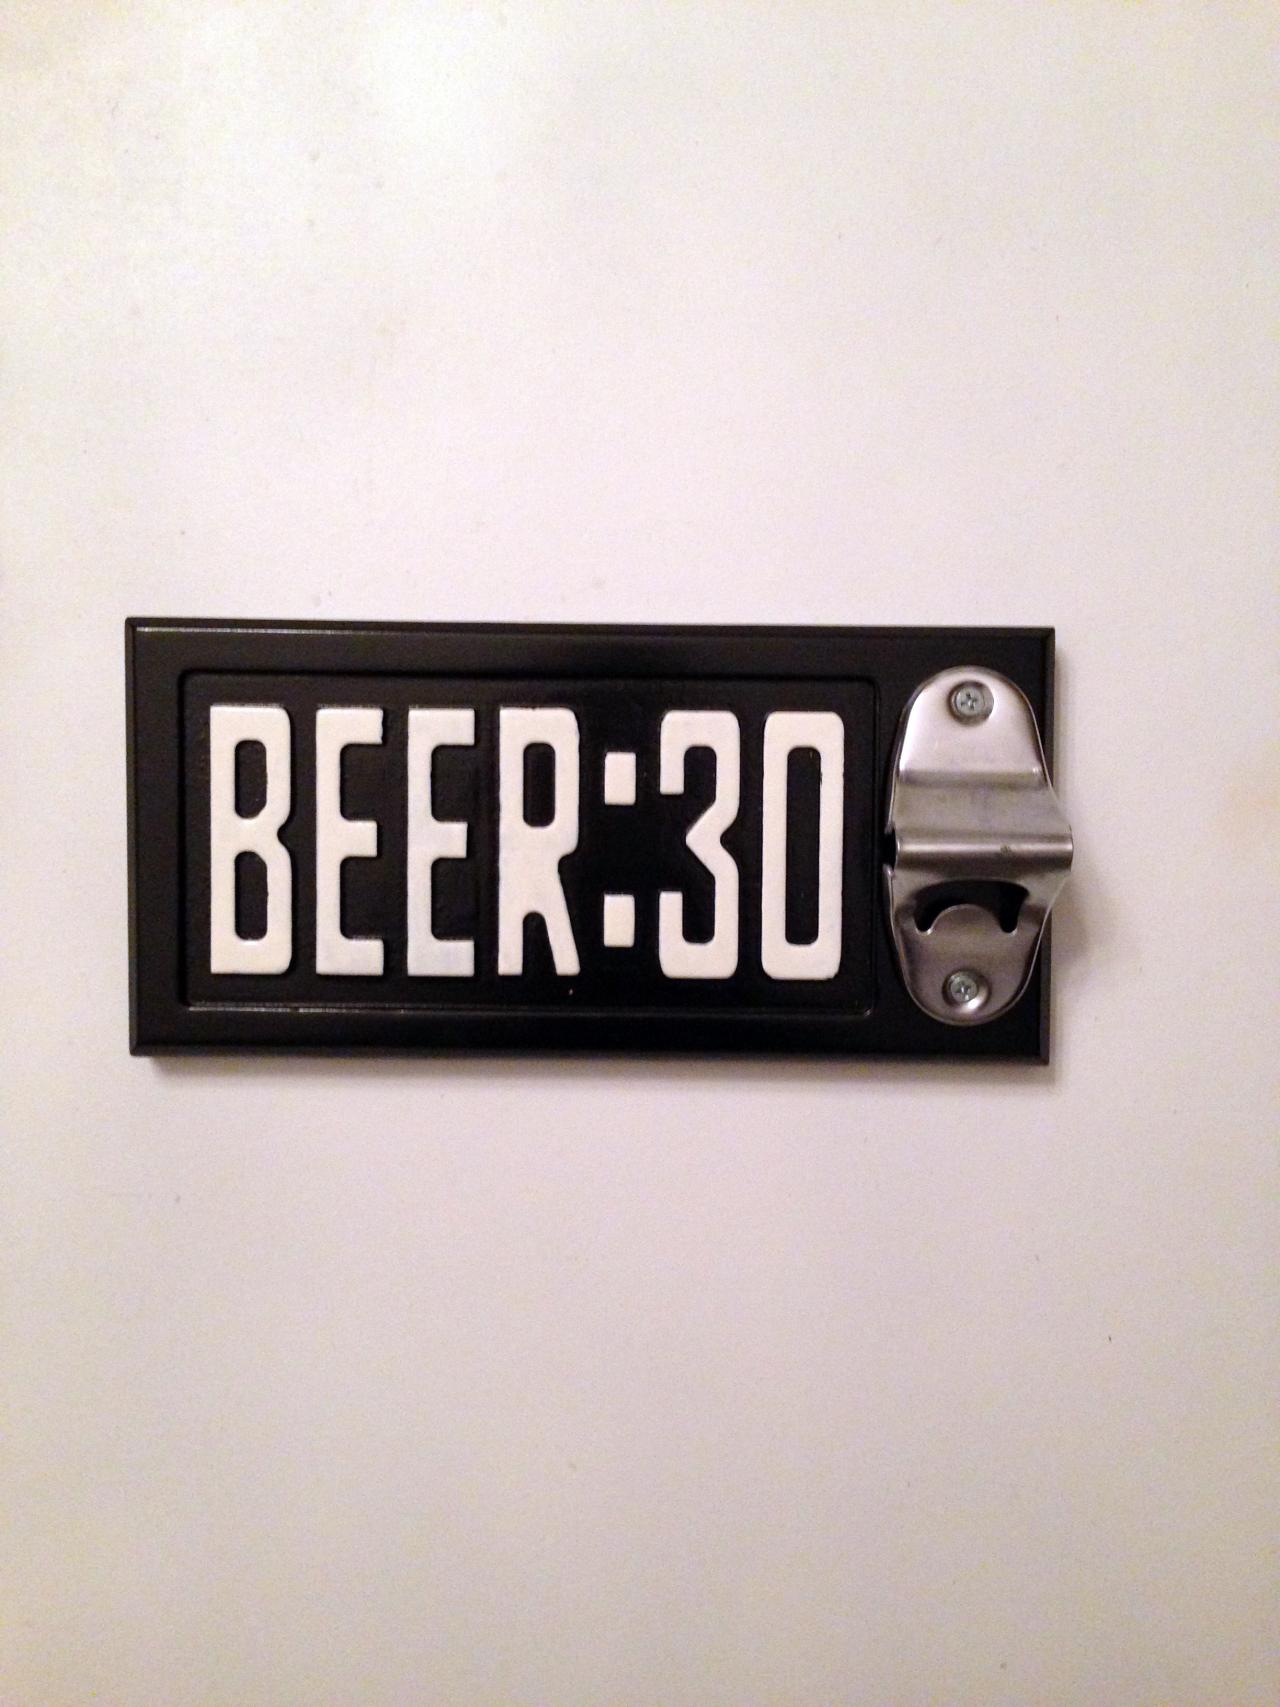 Beer 30 Bottle Opener - Wall Hanging Sign